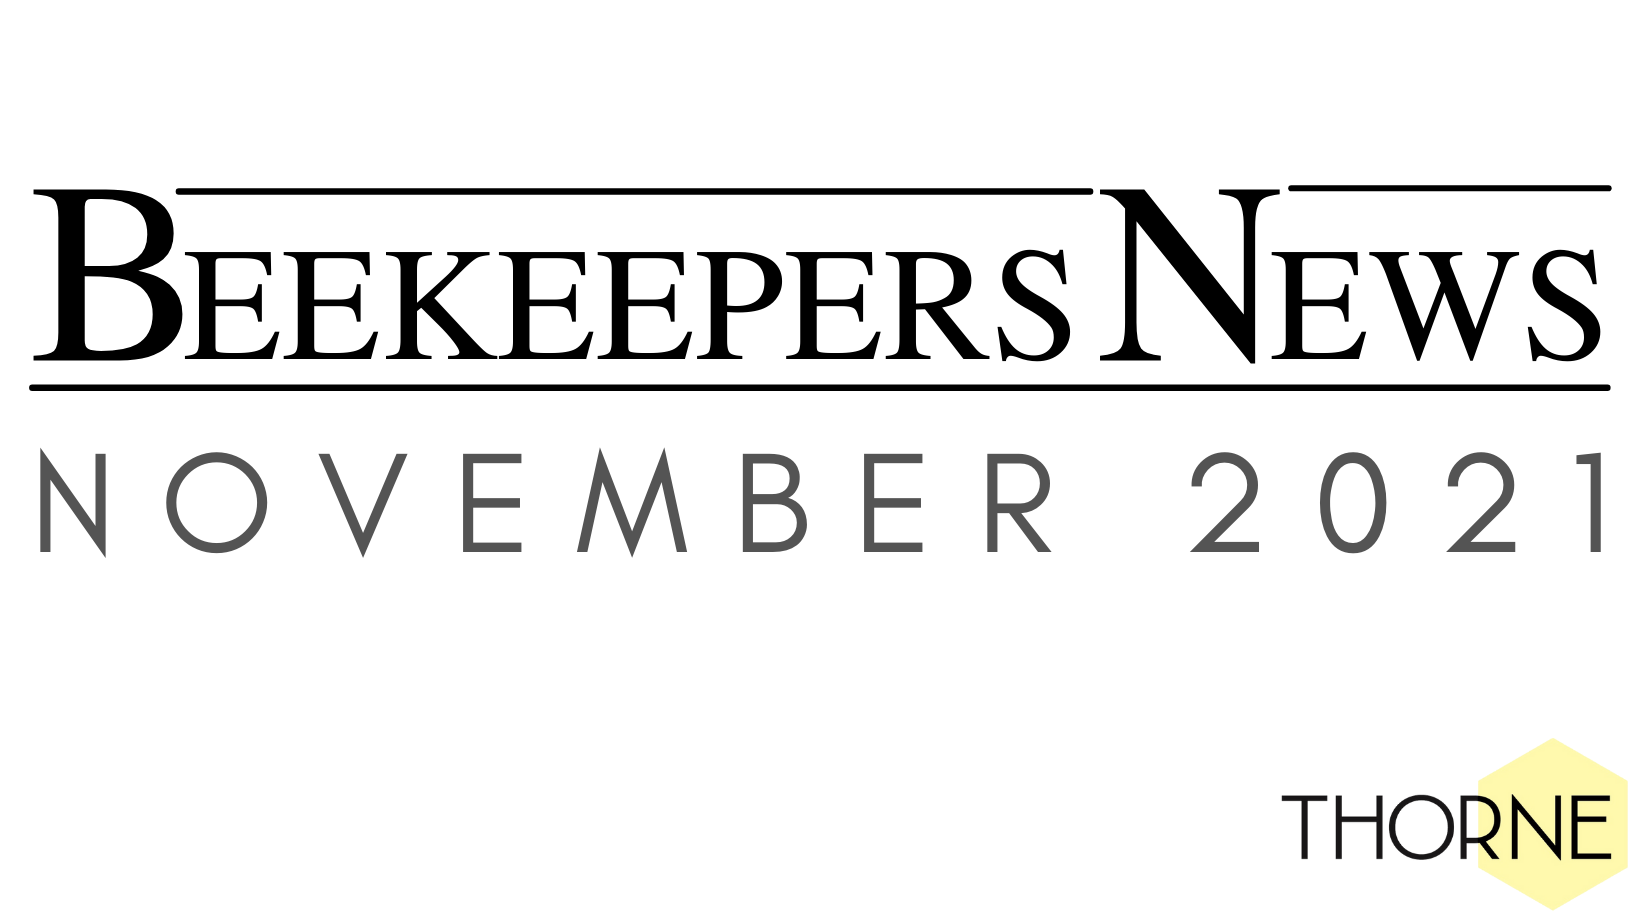 Beekeepers News - November 2021 - Issue 62